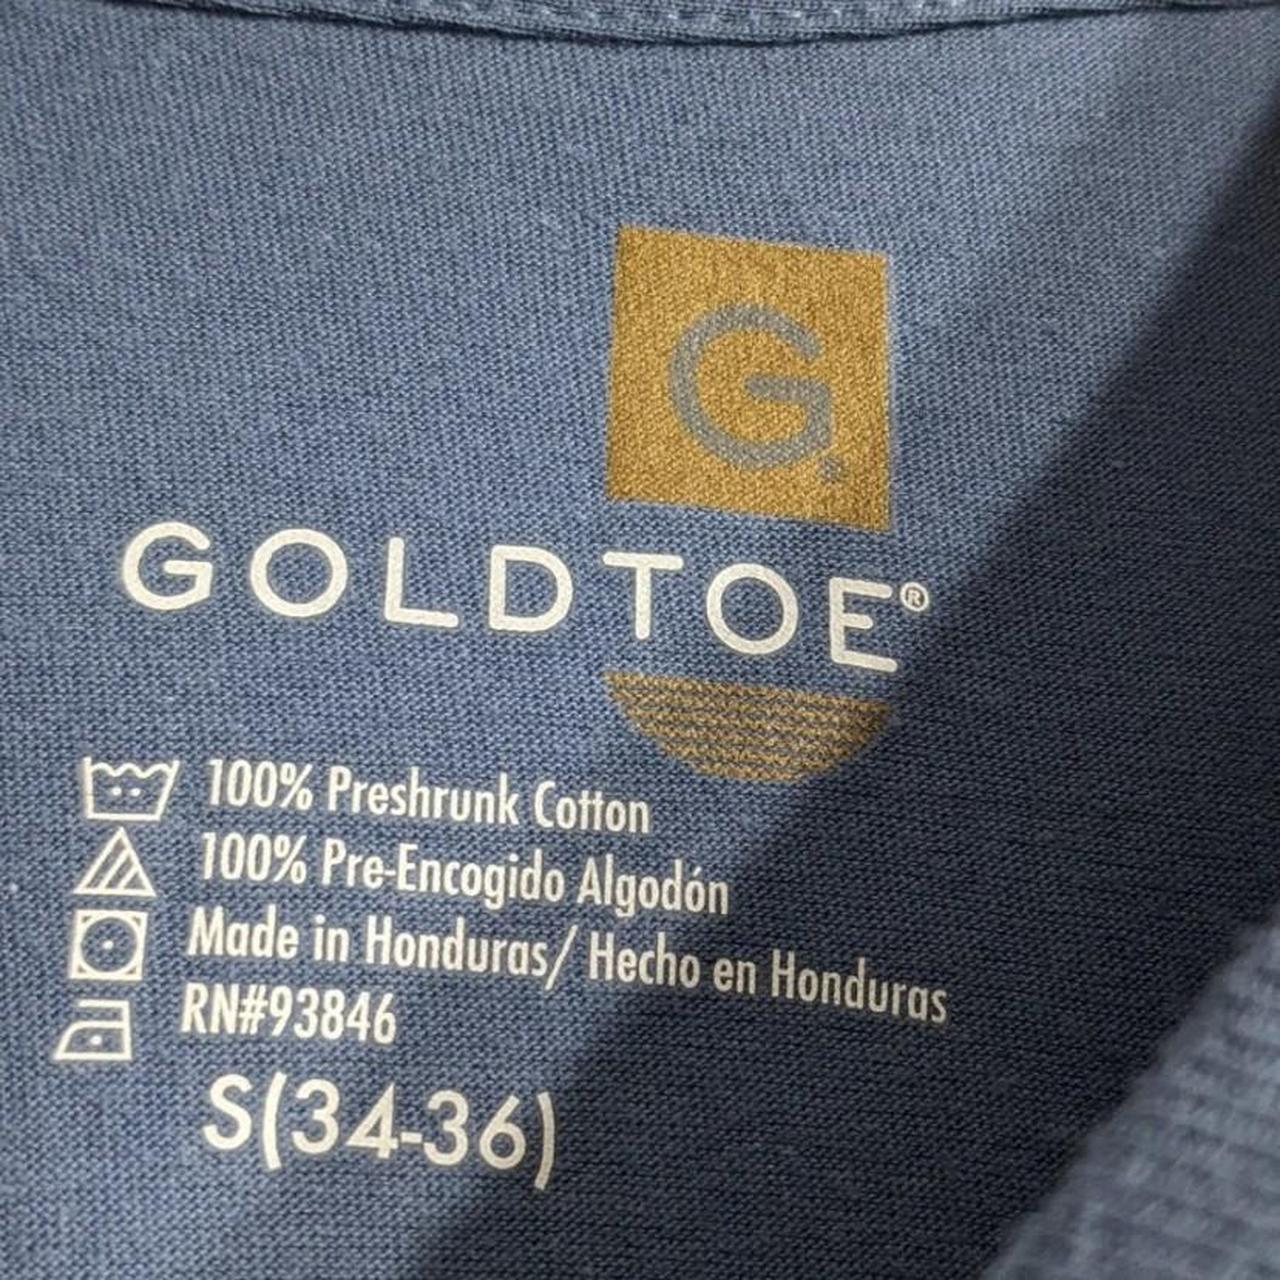 Gold Toe Men's Blue T-shirt (3)